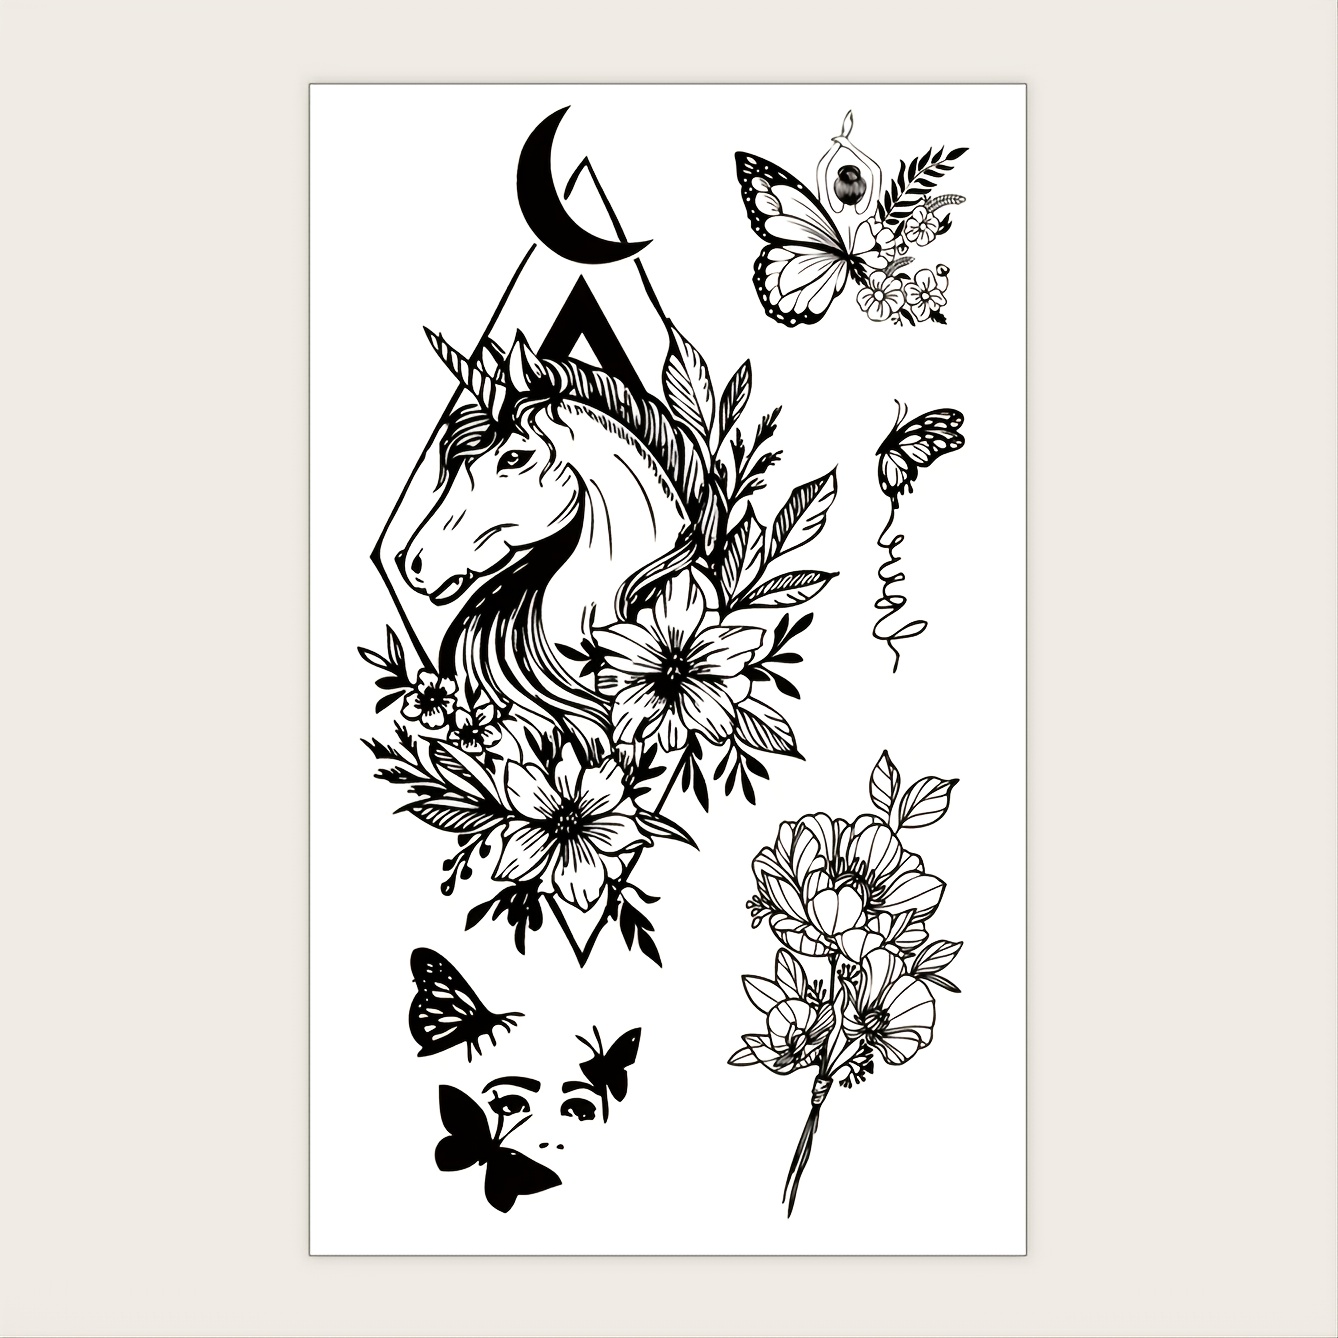 the last unicorn butterfly tattoo